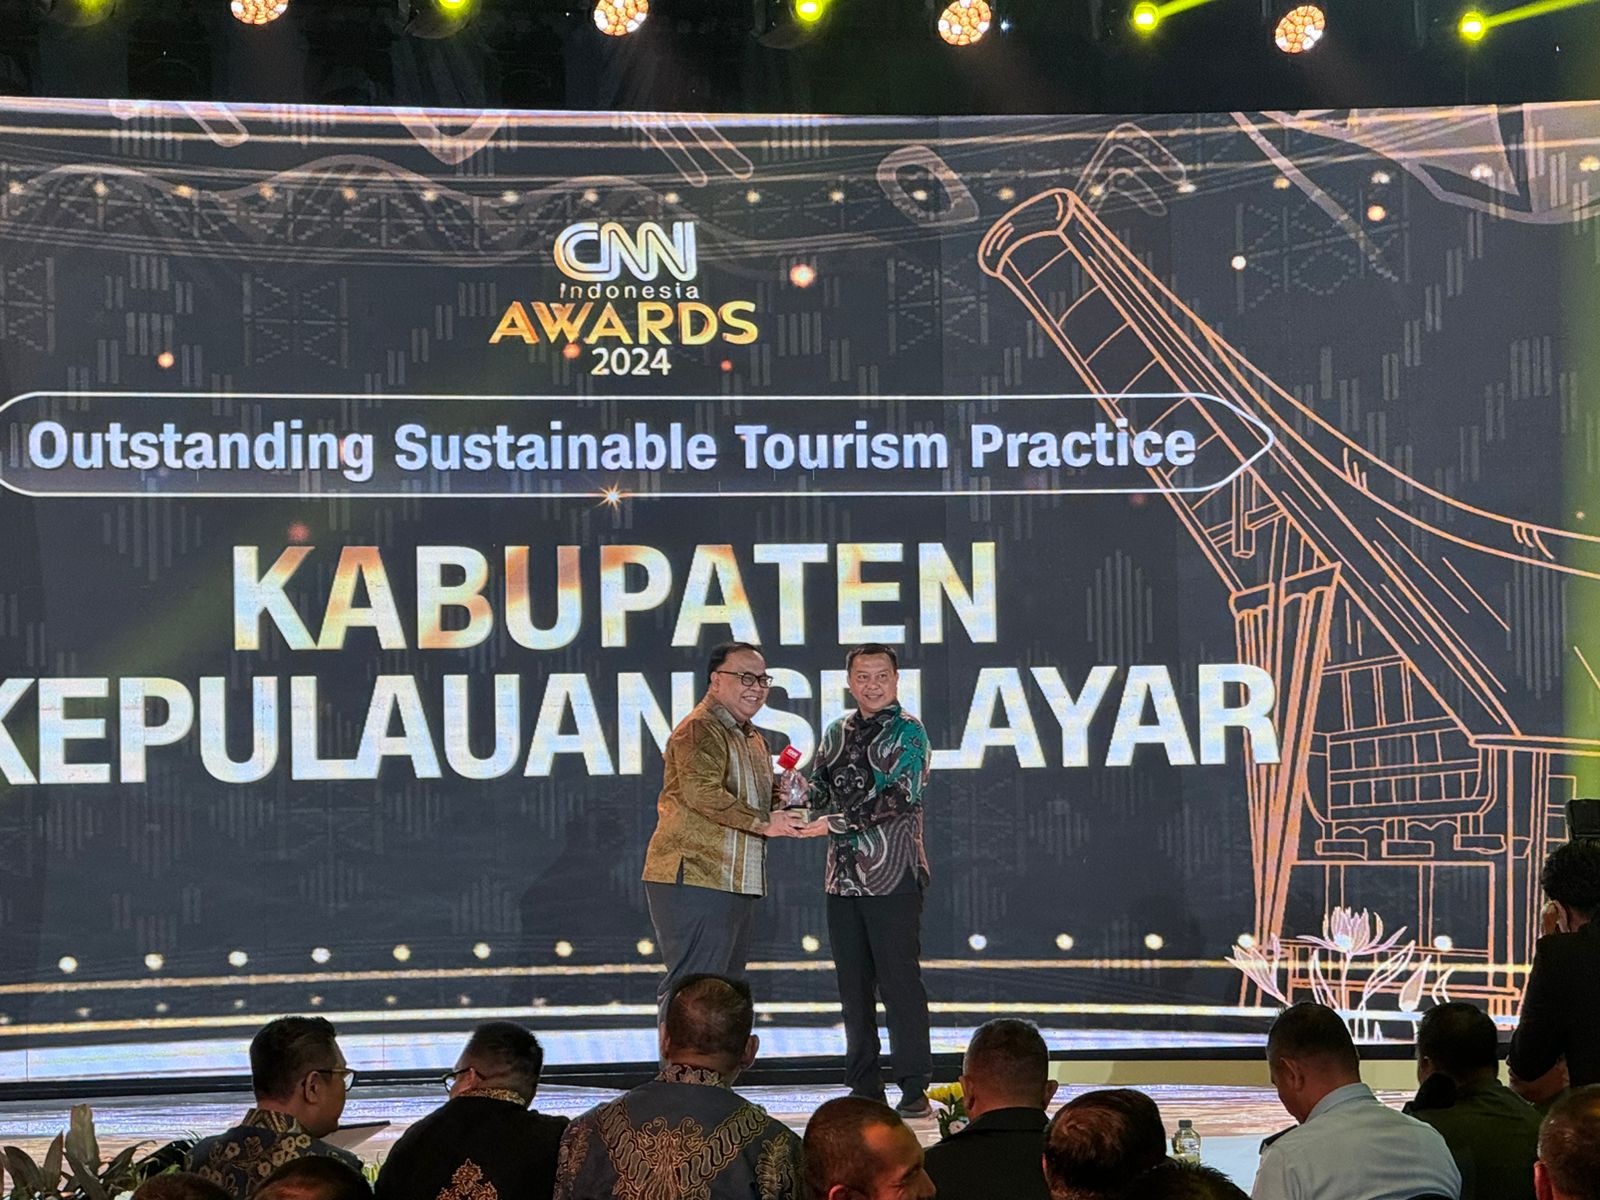 Pemkab Selayar Terbaik Outstanding Sustainable Tourism Practice Versi CNN Indonesia Awards